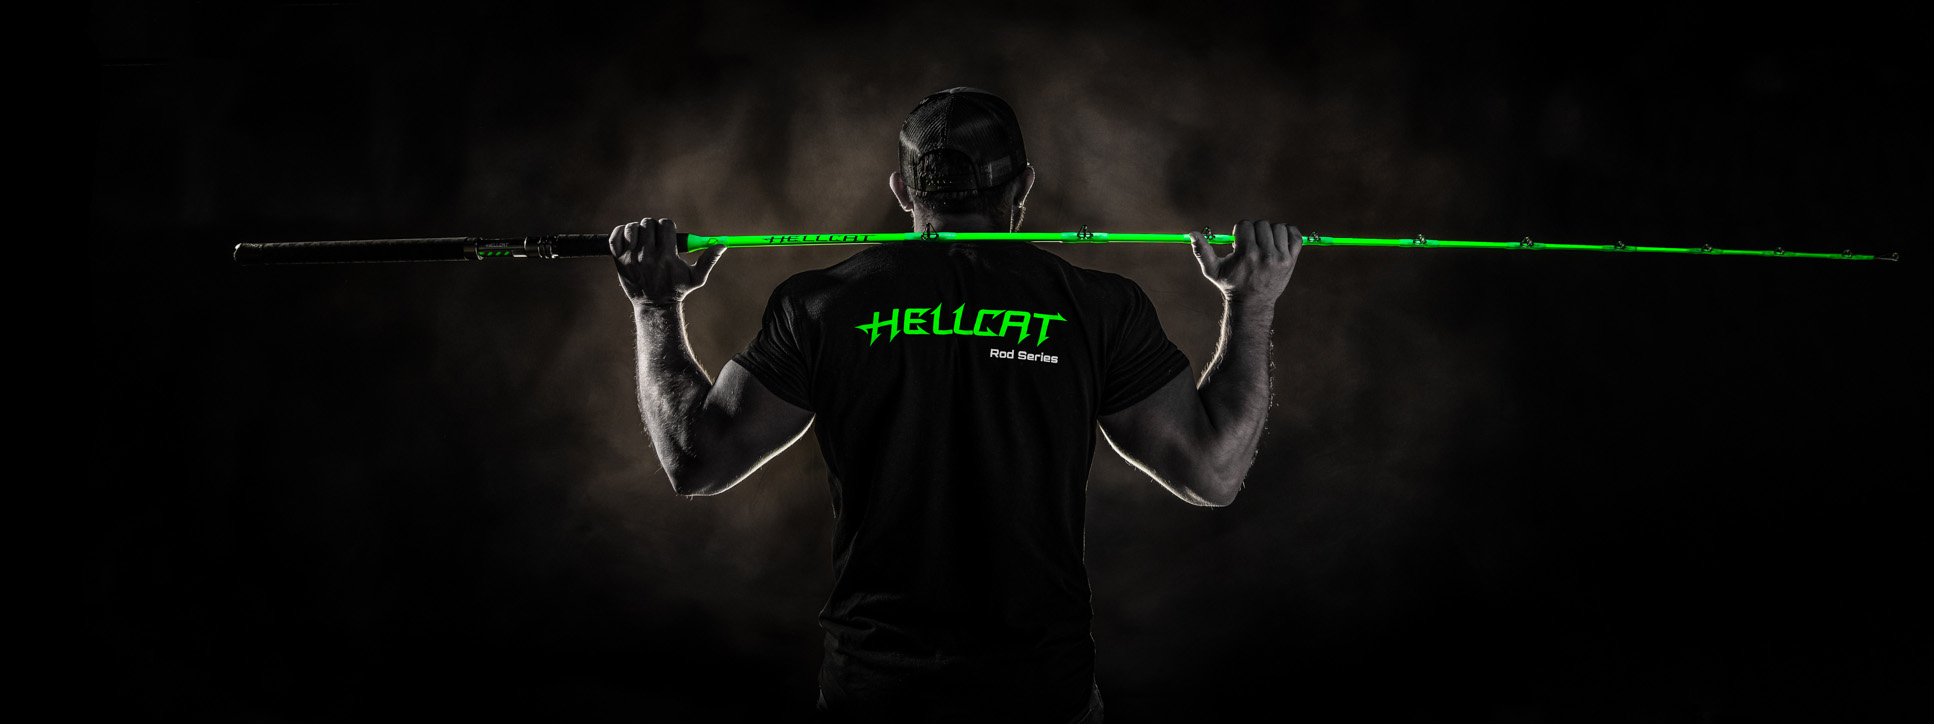 Hellcat Rod Series